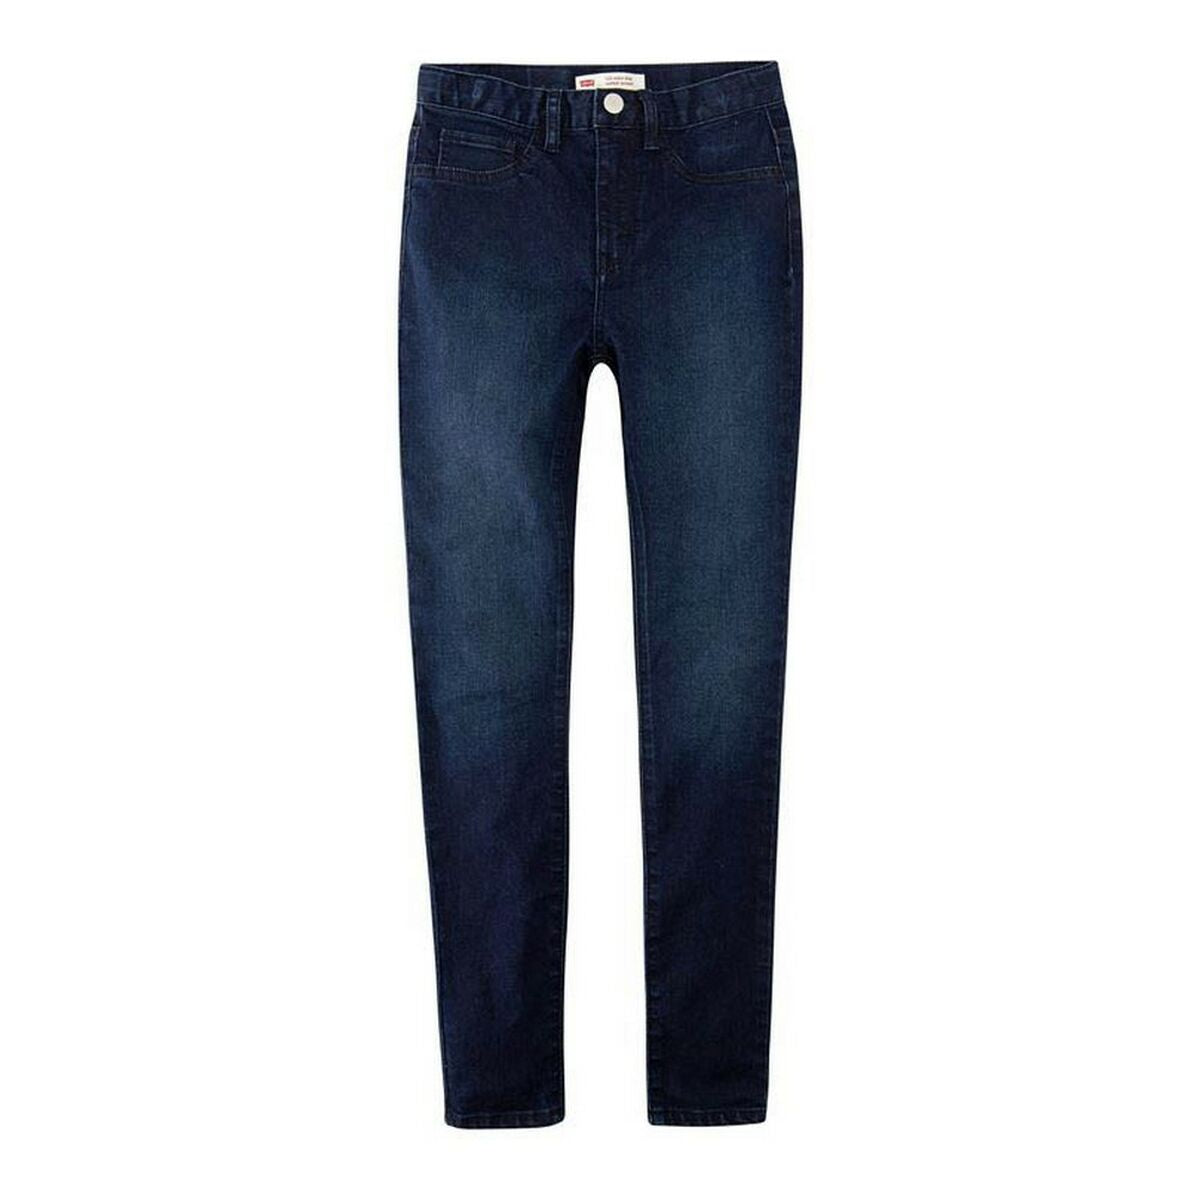 Jeans Levi's 720 High Rise Super Skinny Girl Dark blue